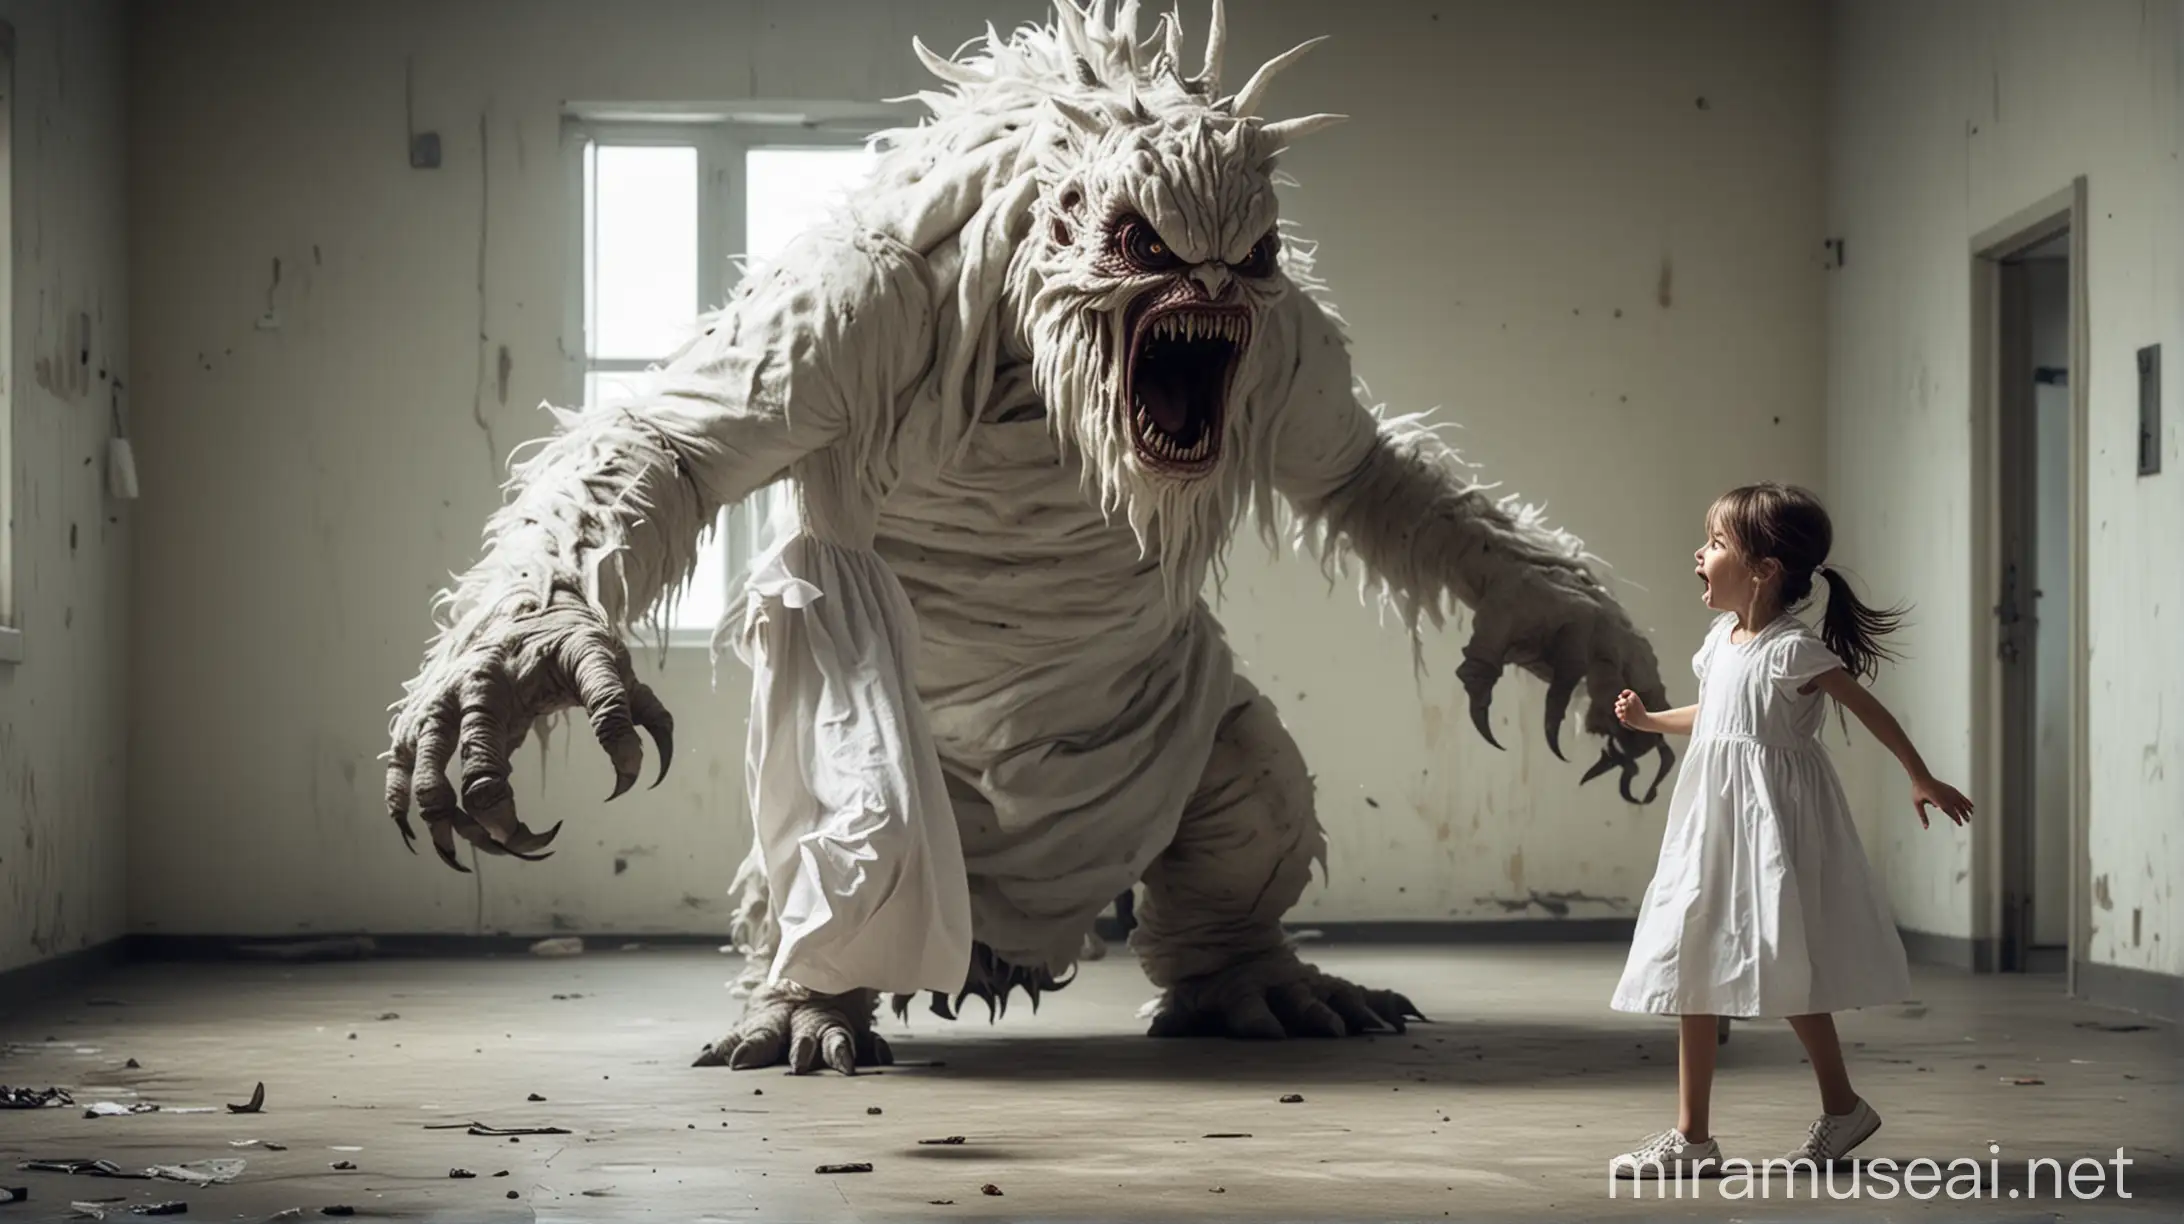 a little girl wear white dress fighting big monster in the mental hospital